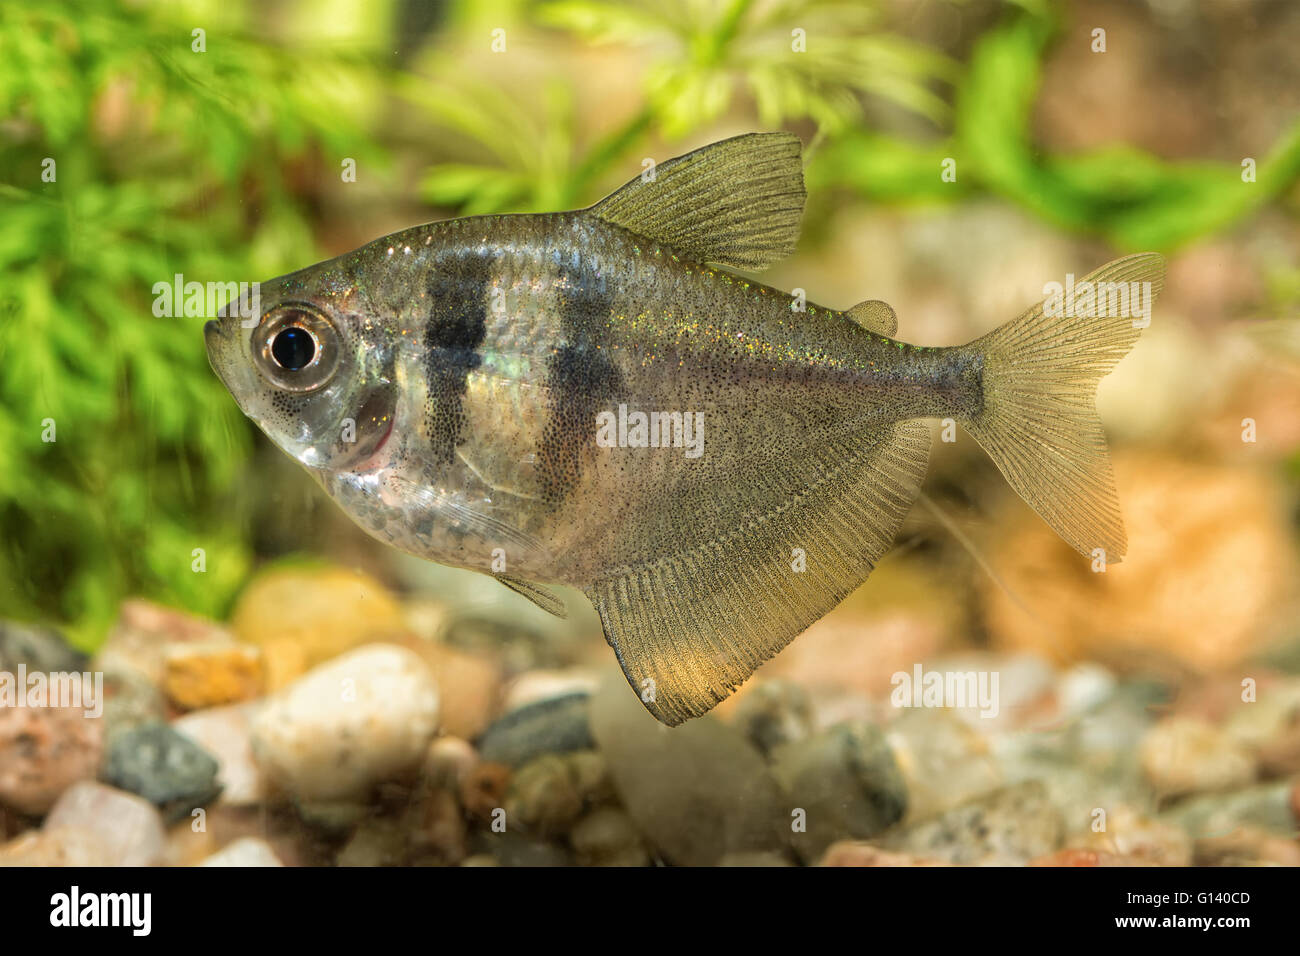 Nice aquarium fish from genus Hyphessobrycon Stock Photo